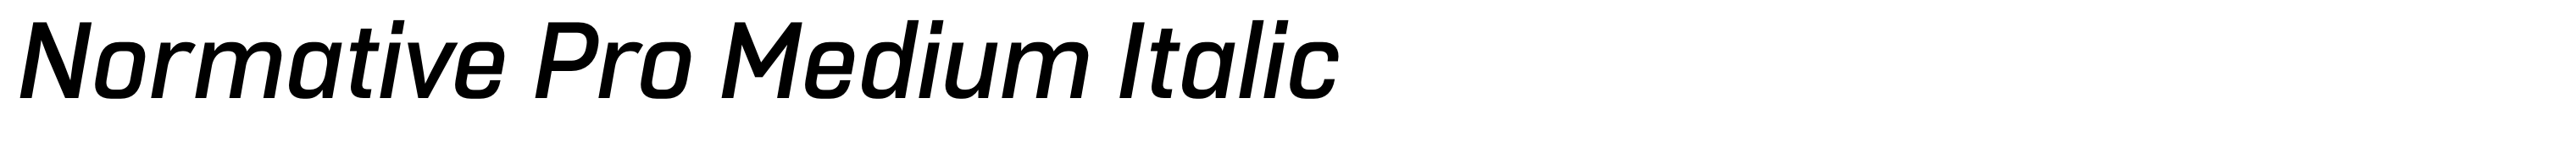 Normative Pro Medium Italic